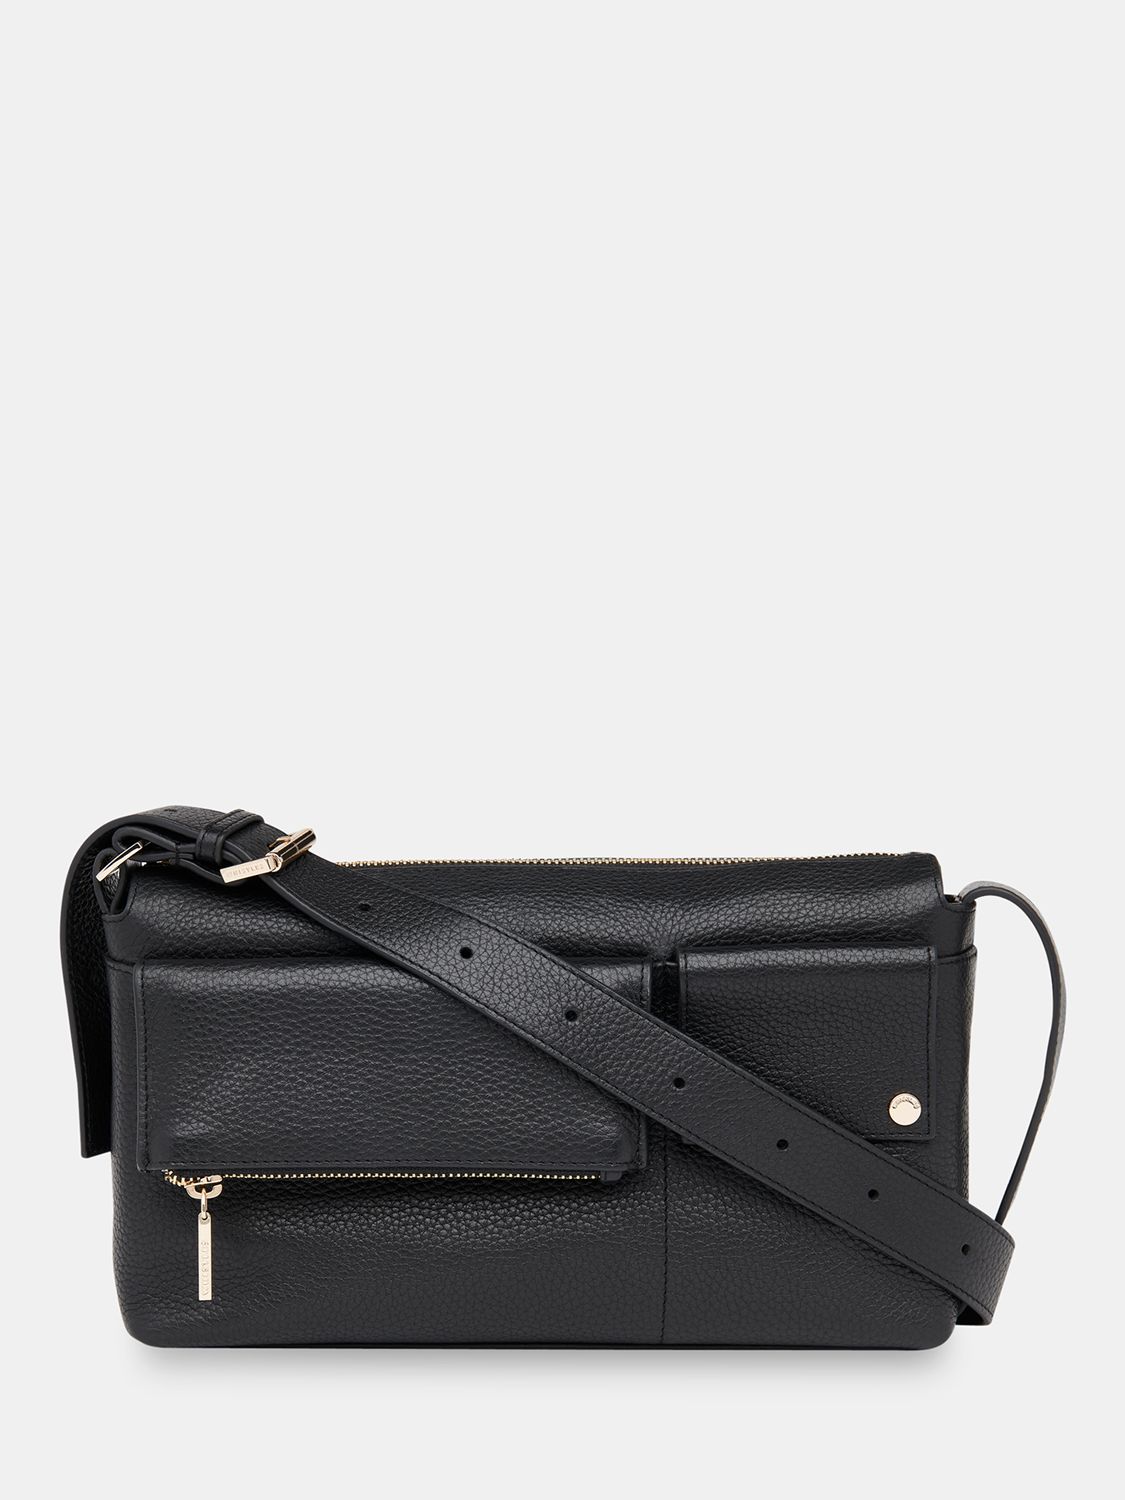 Whistles Tilda Pocket Detail Handbag, Black, One Size